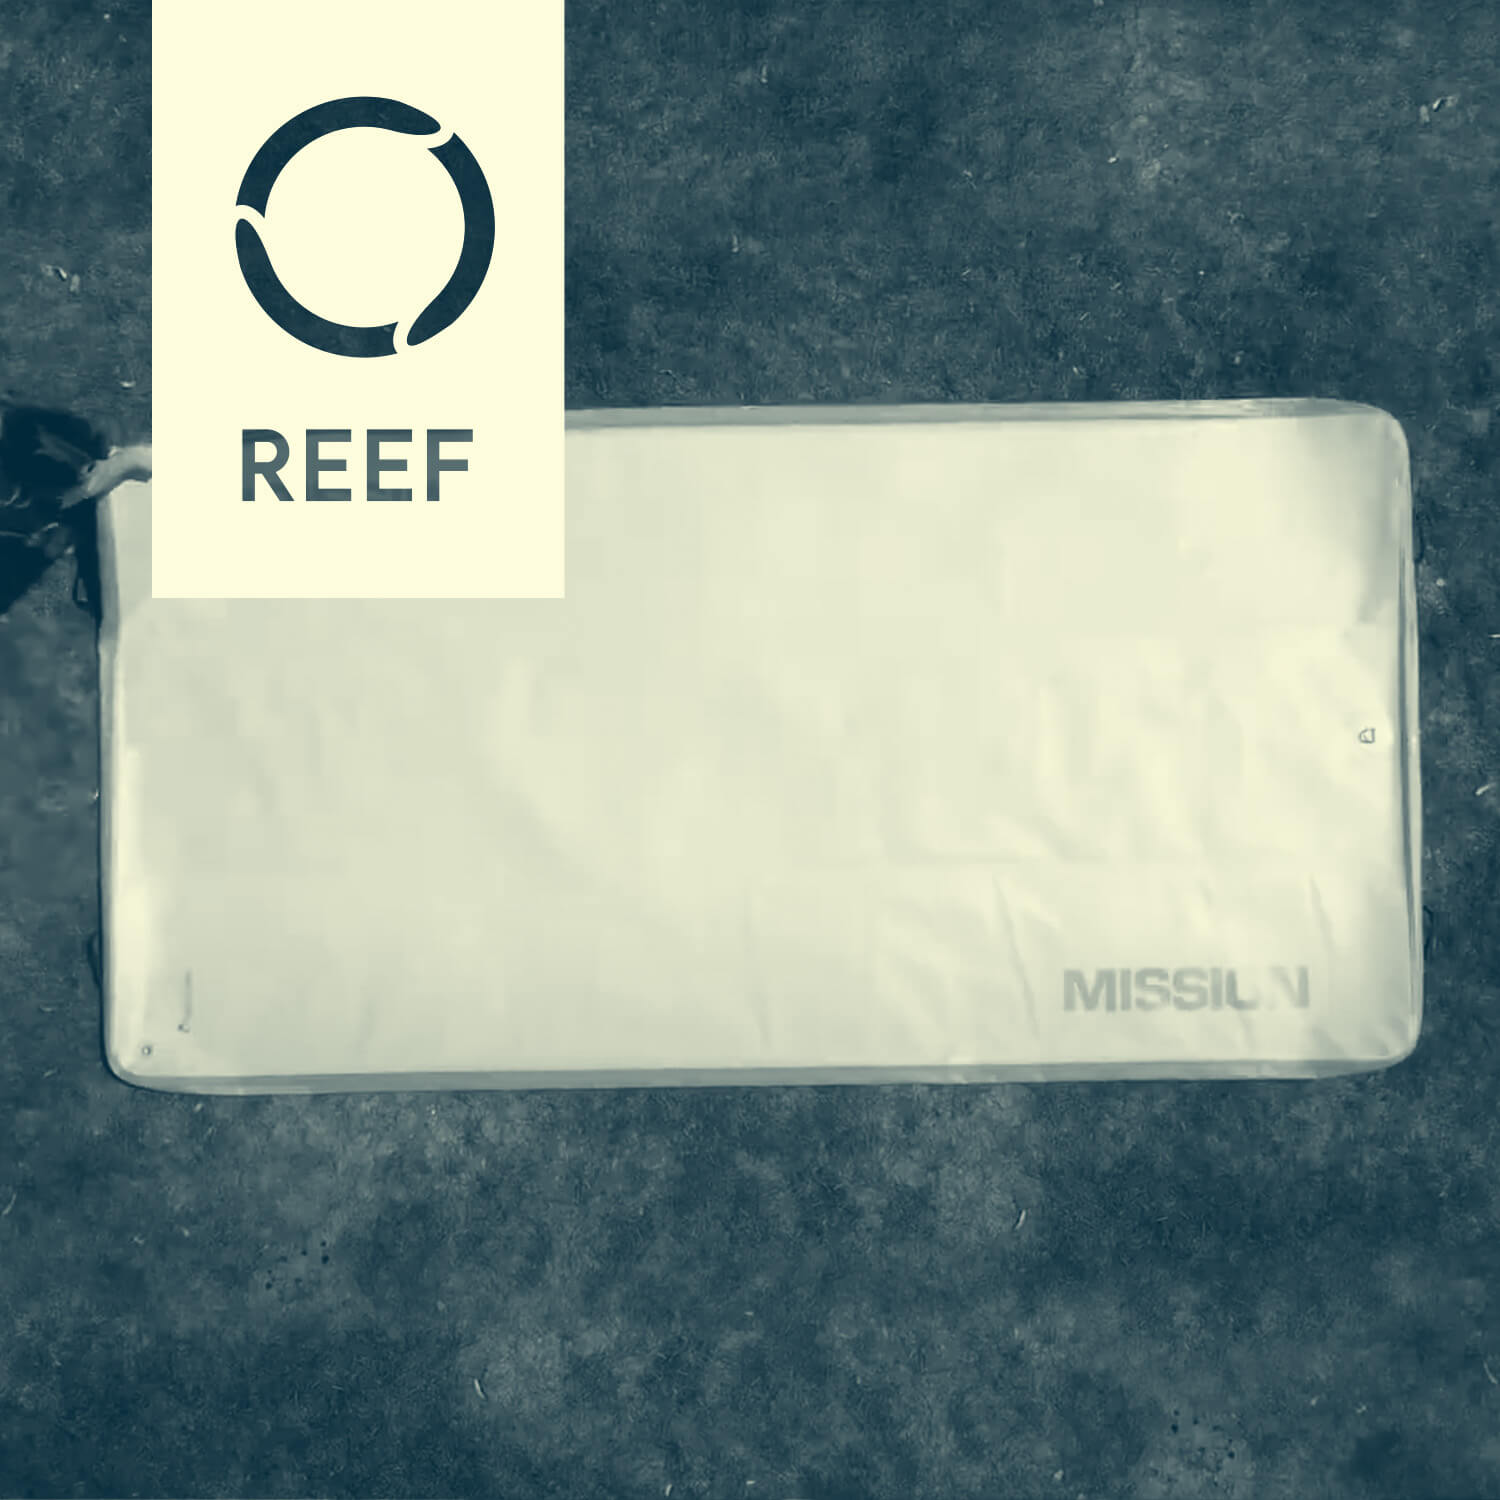 Folding your REEF Mat